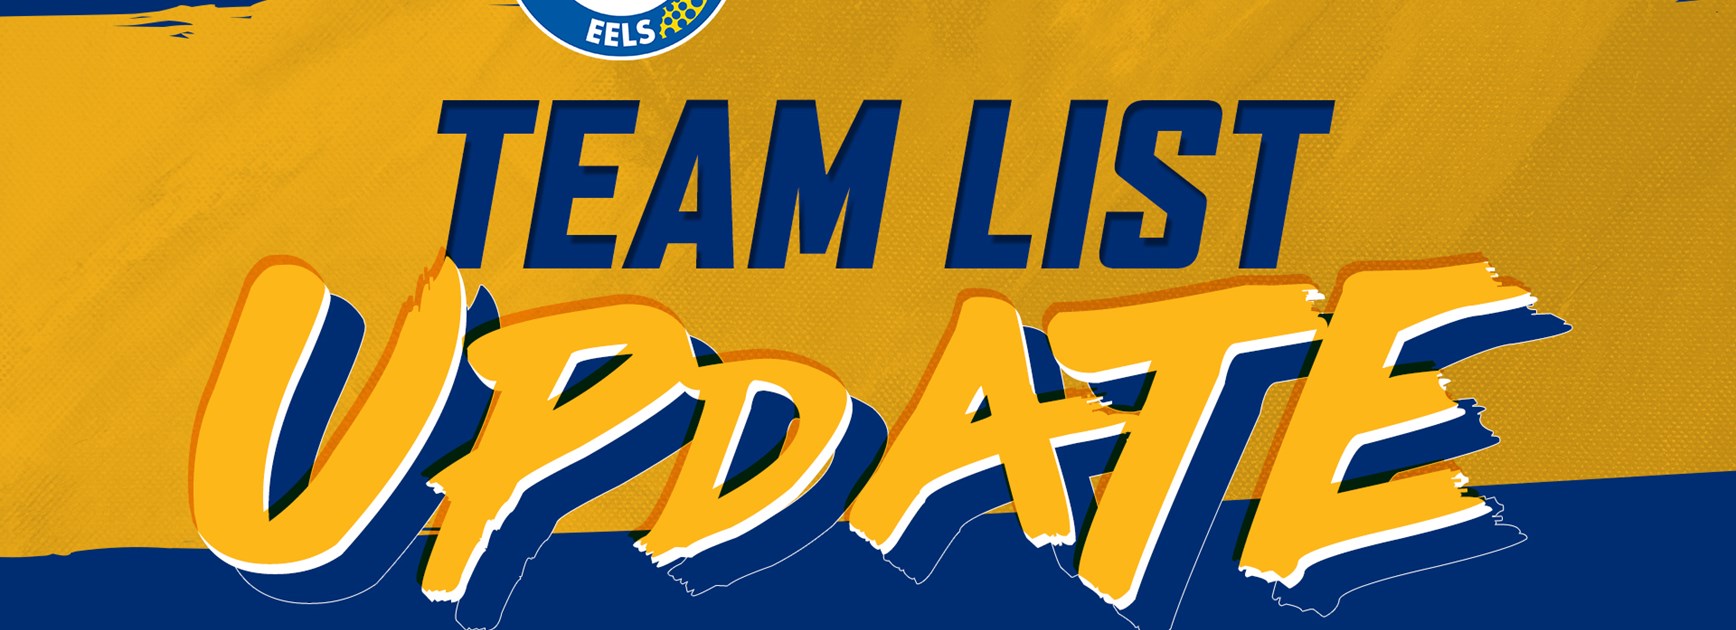 Eels v Knights Team List Update